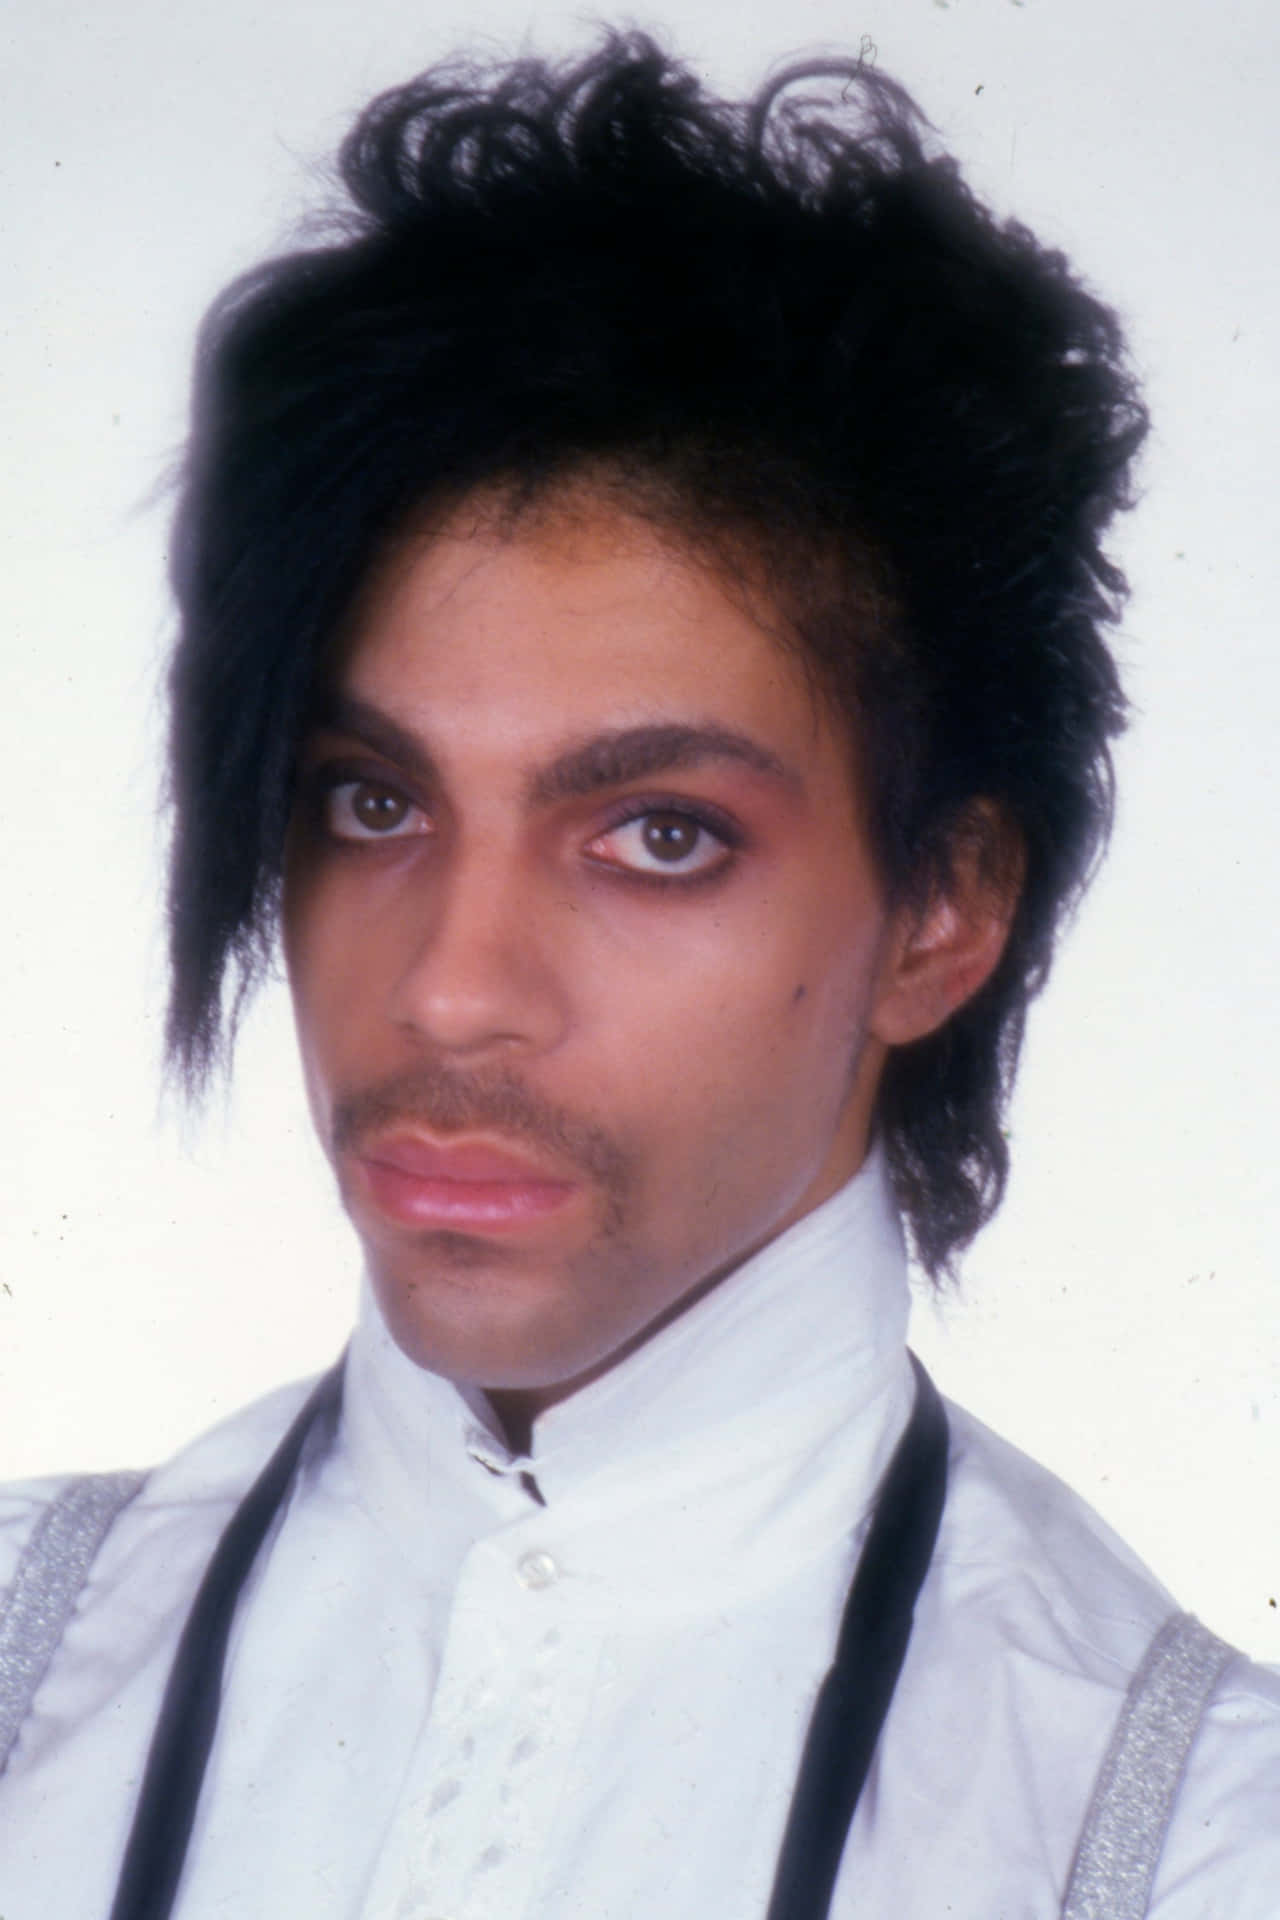 Derlegendäre Künstler - Prince